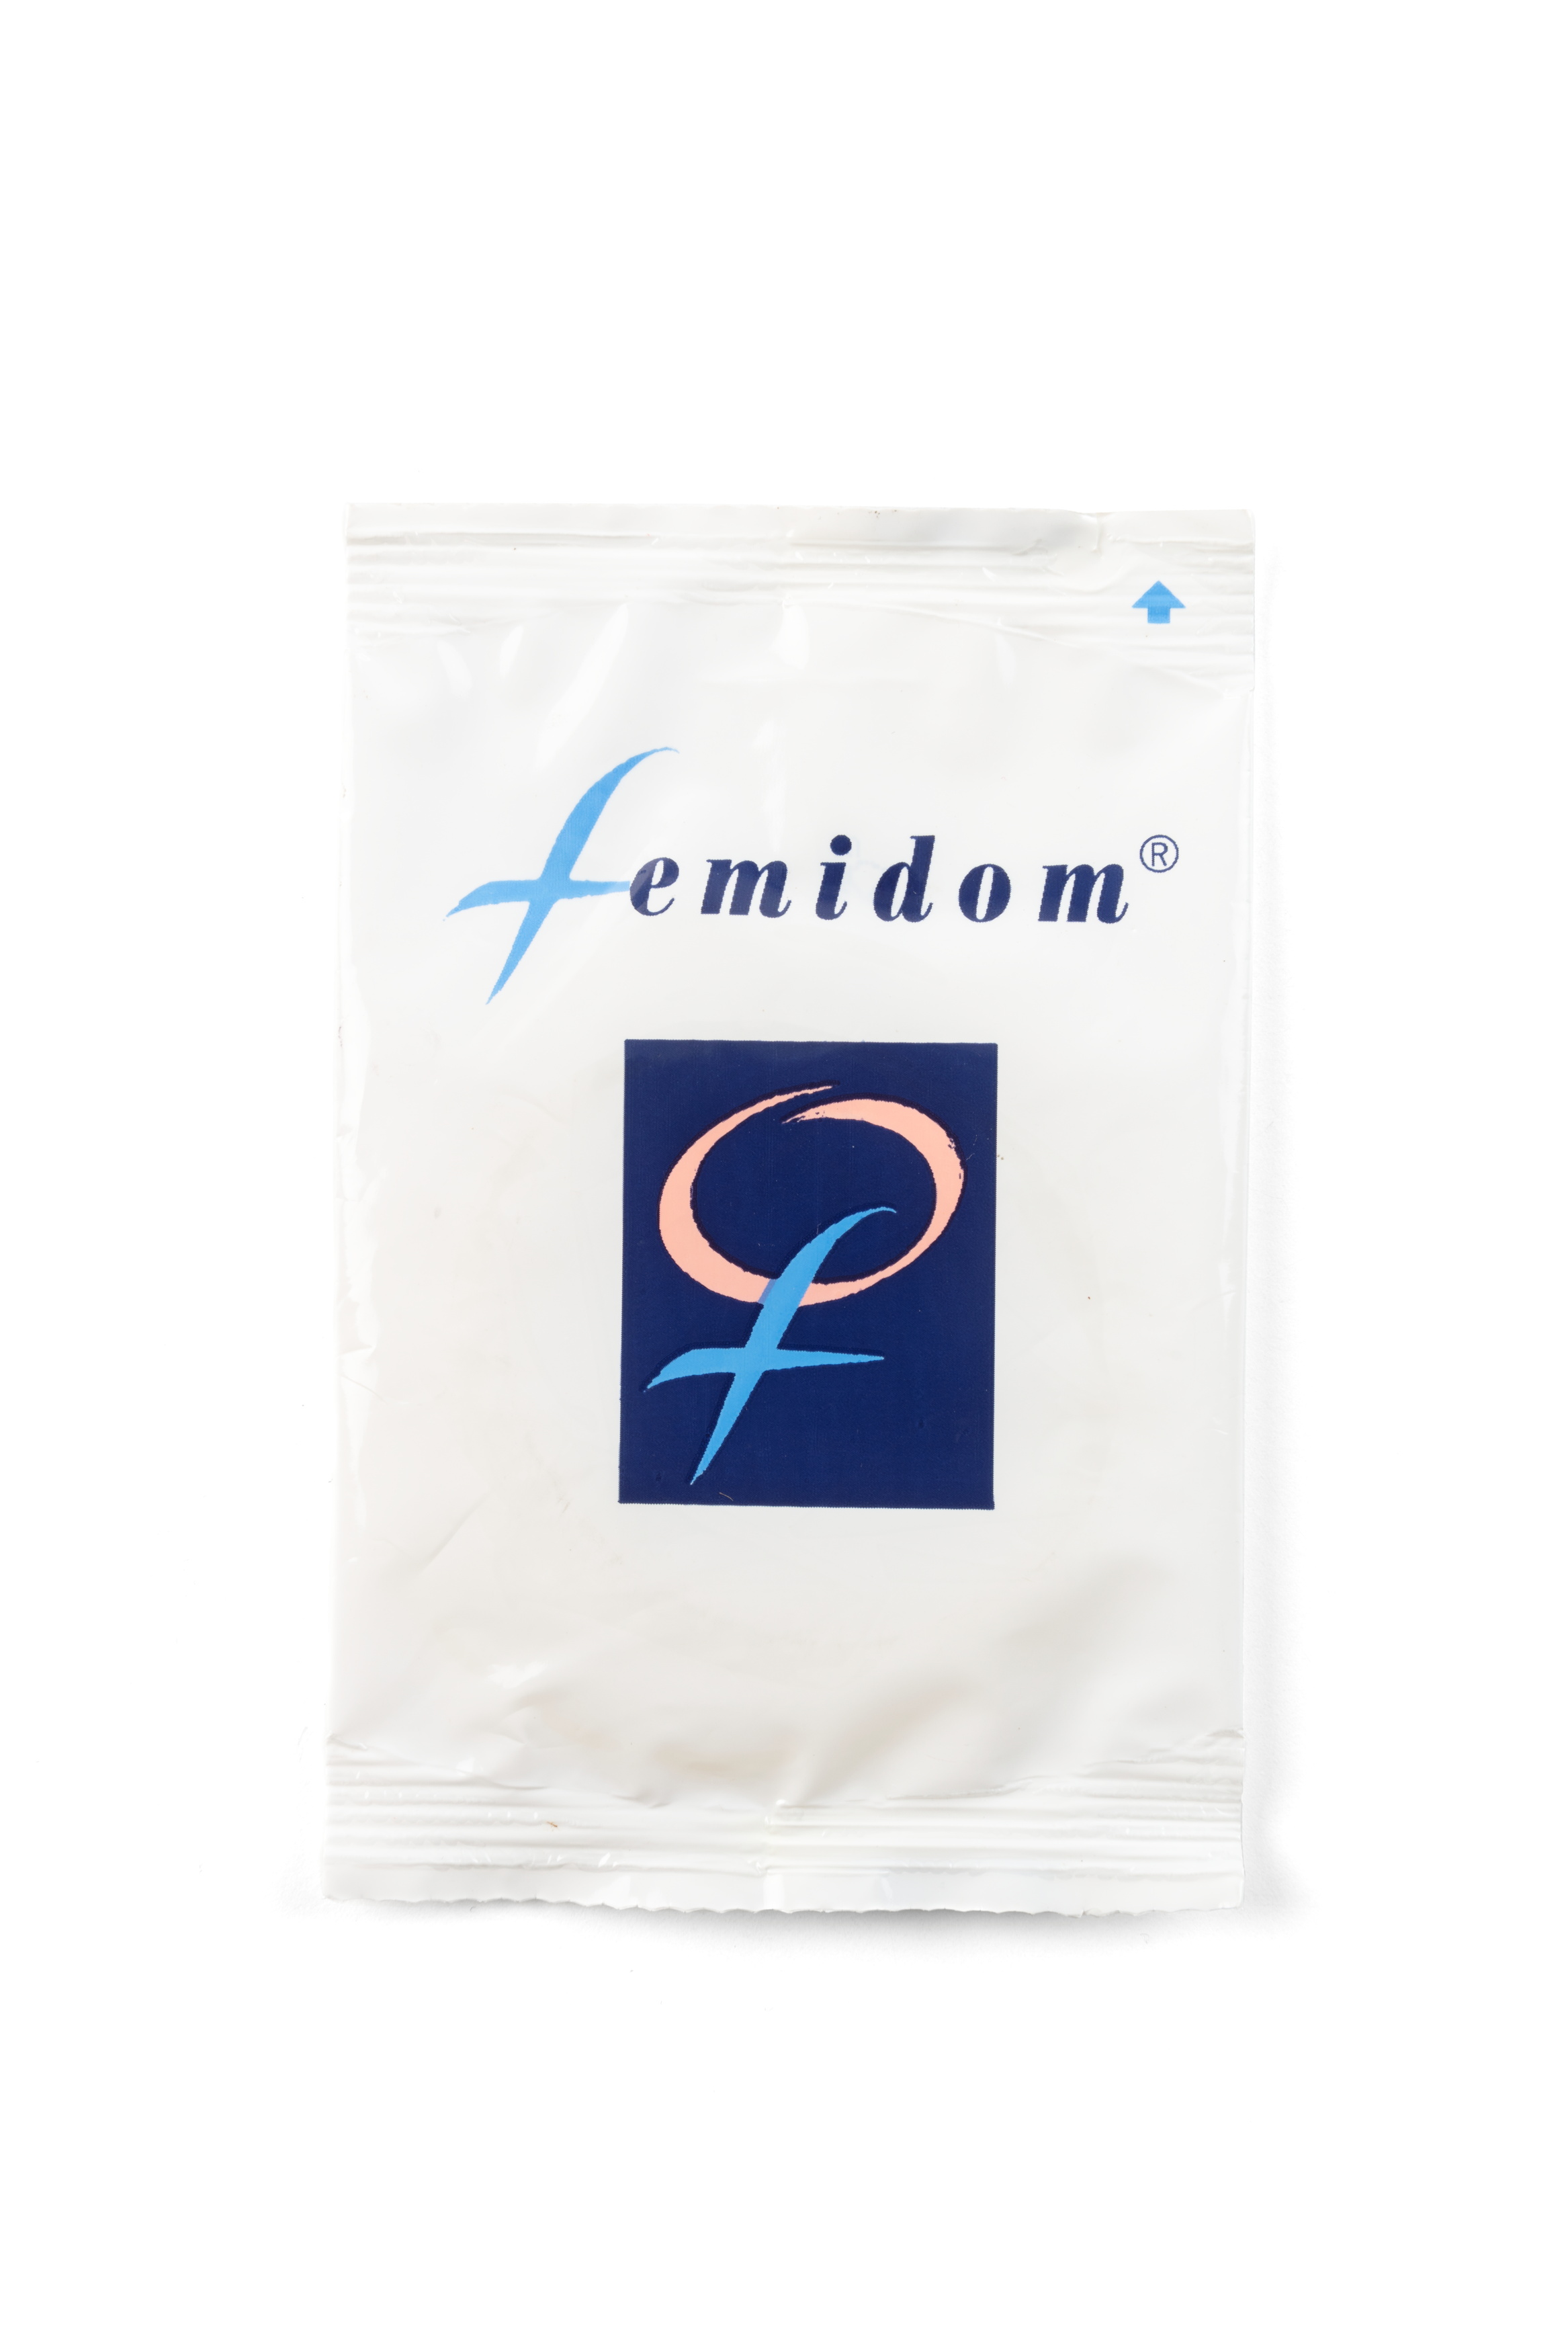 'Femidom' female condom